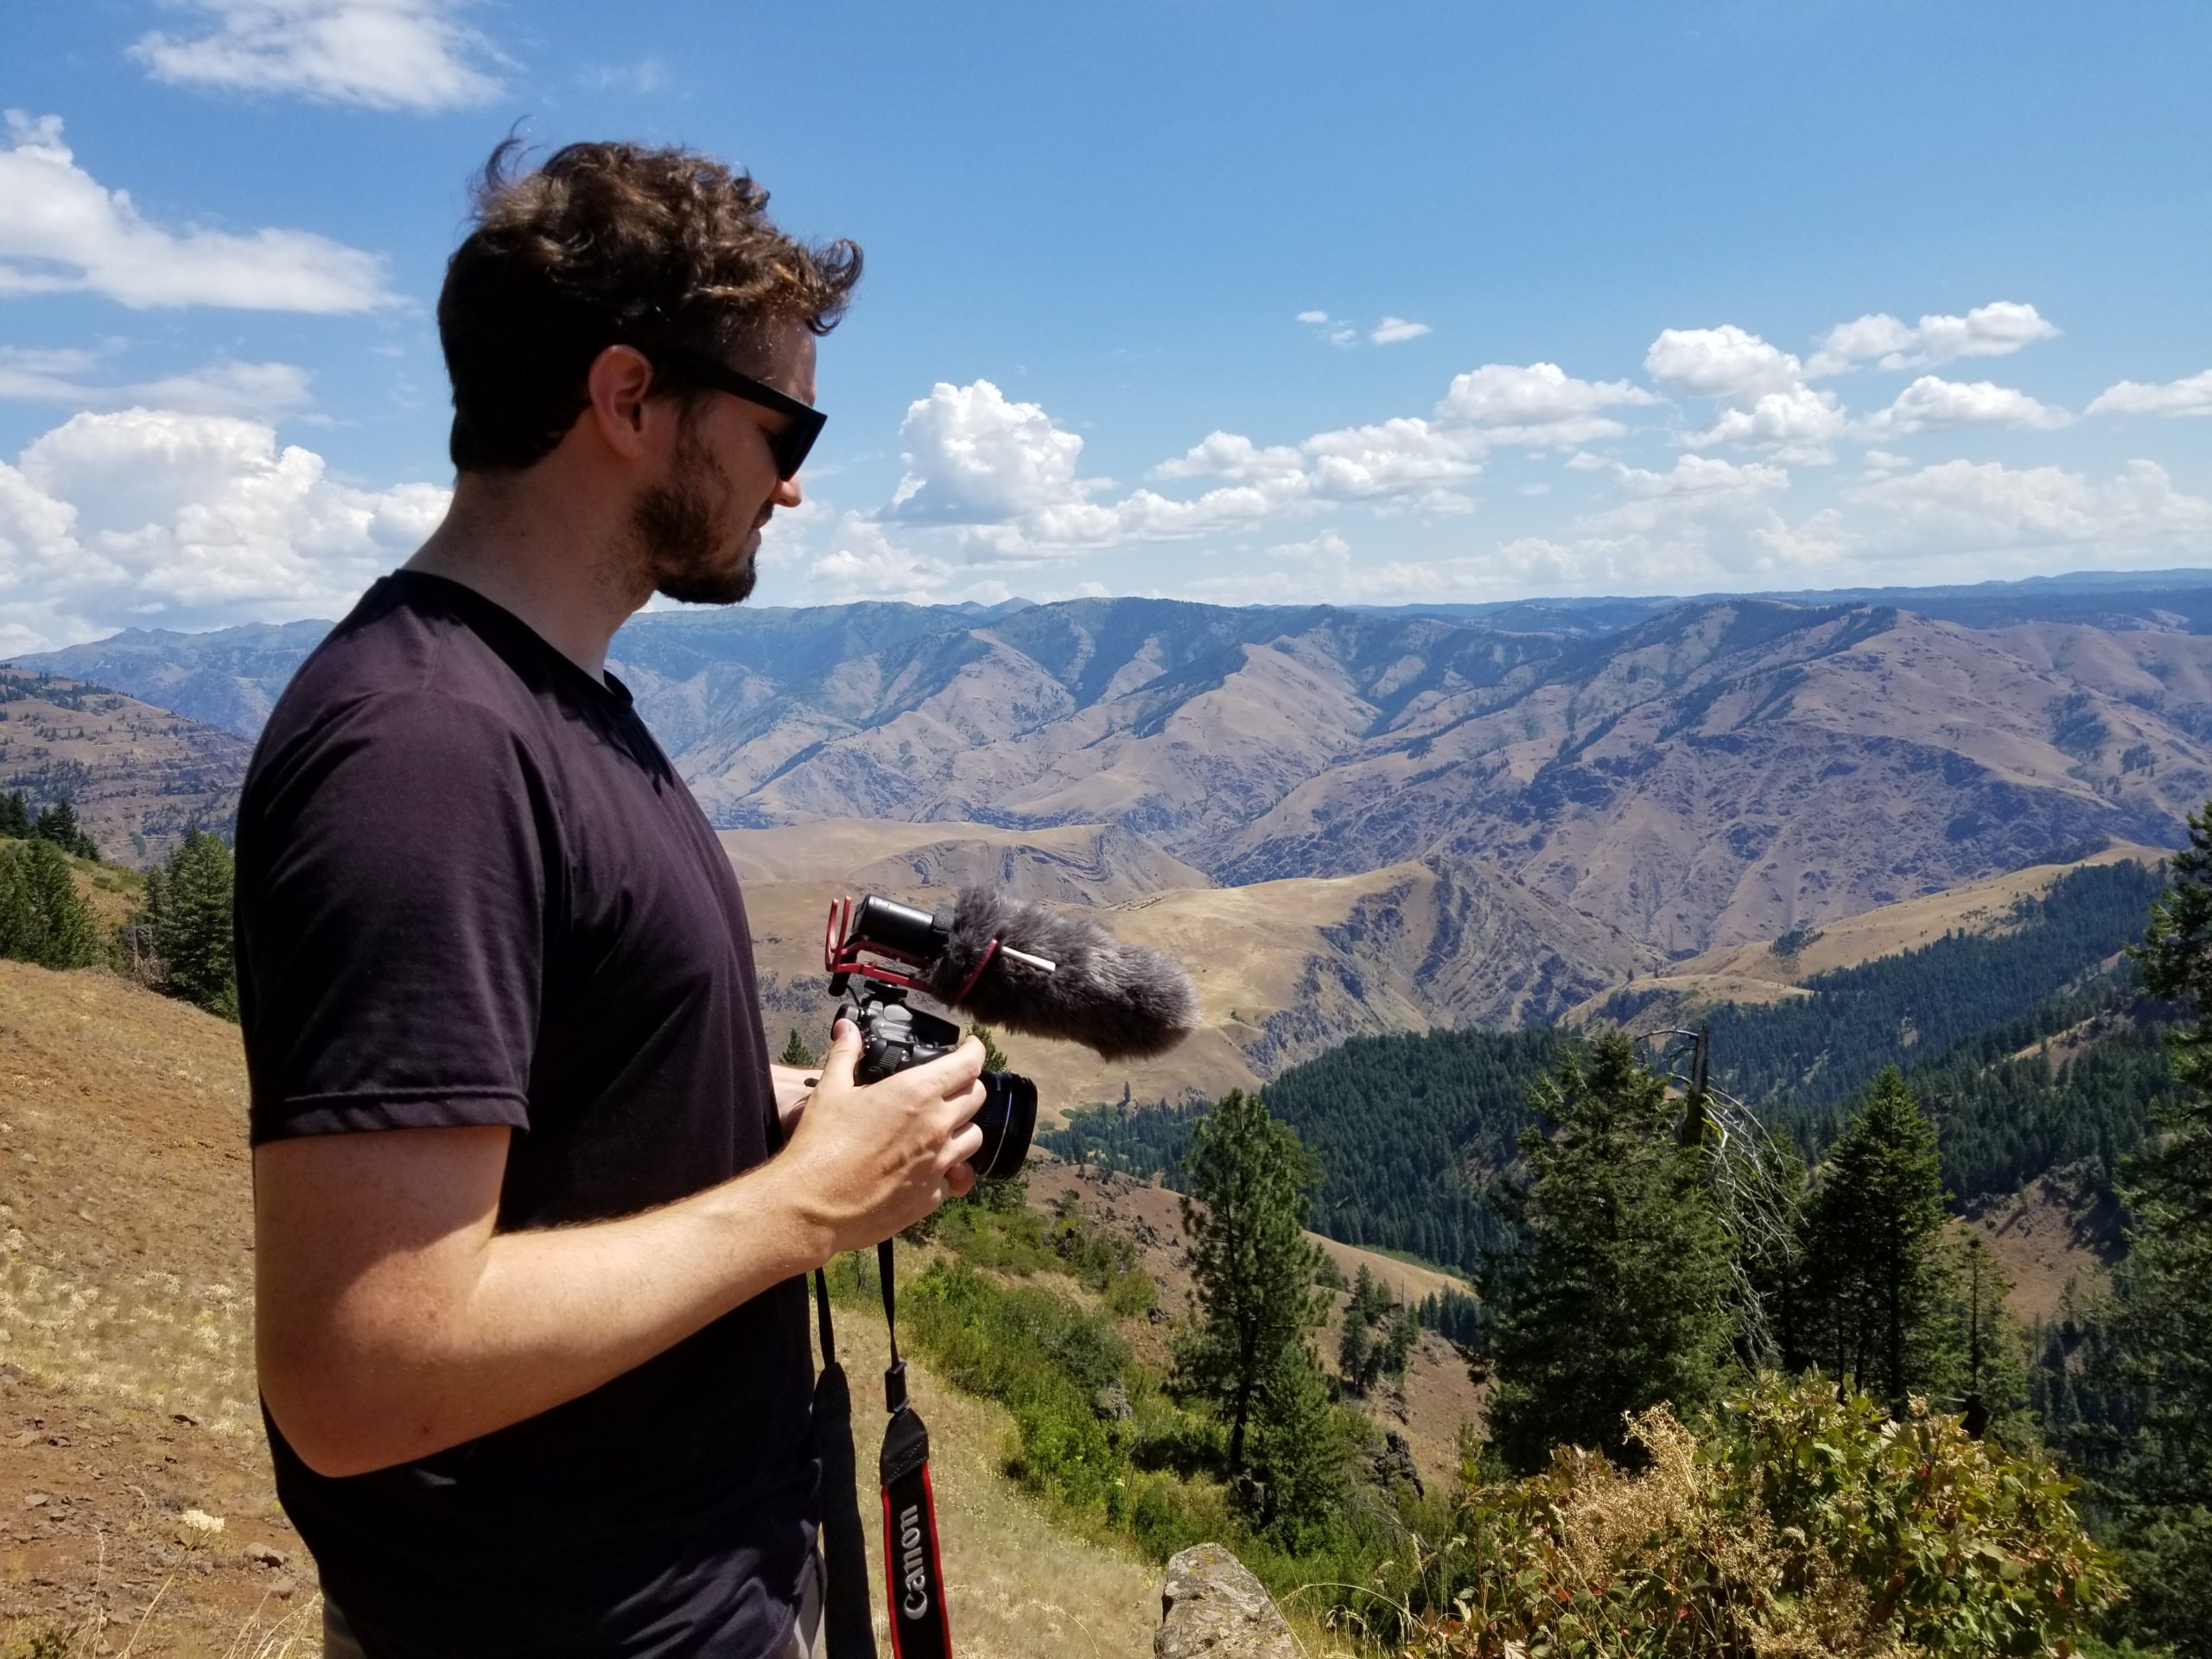 Matt Cook Oregon Videos On Hiking, Wilderness, Exploration